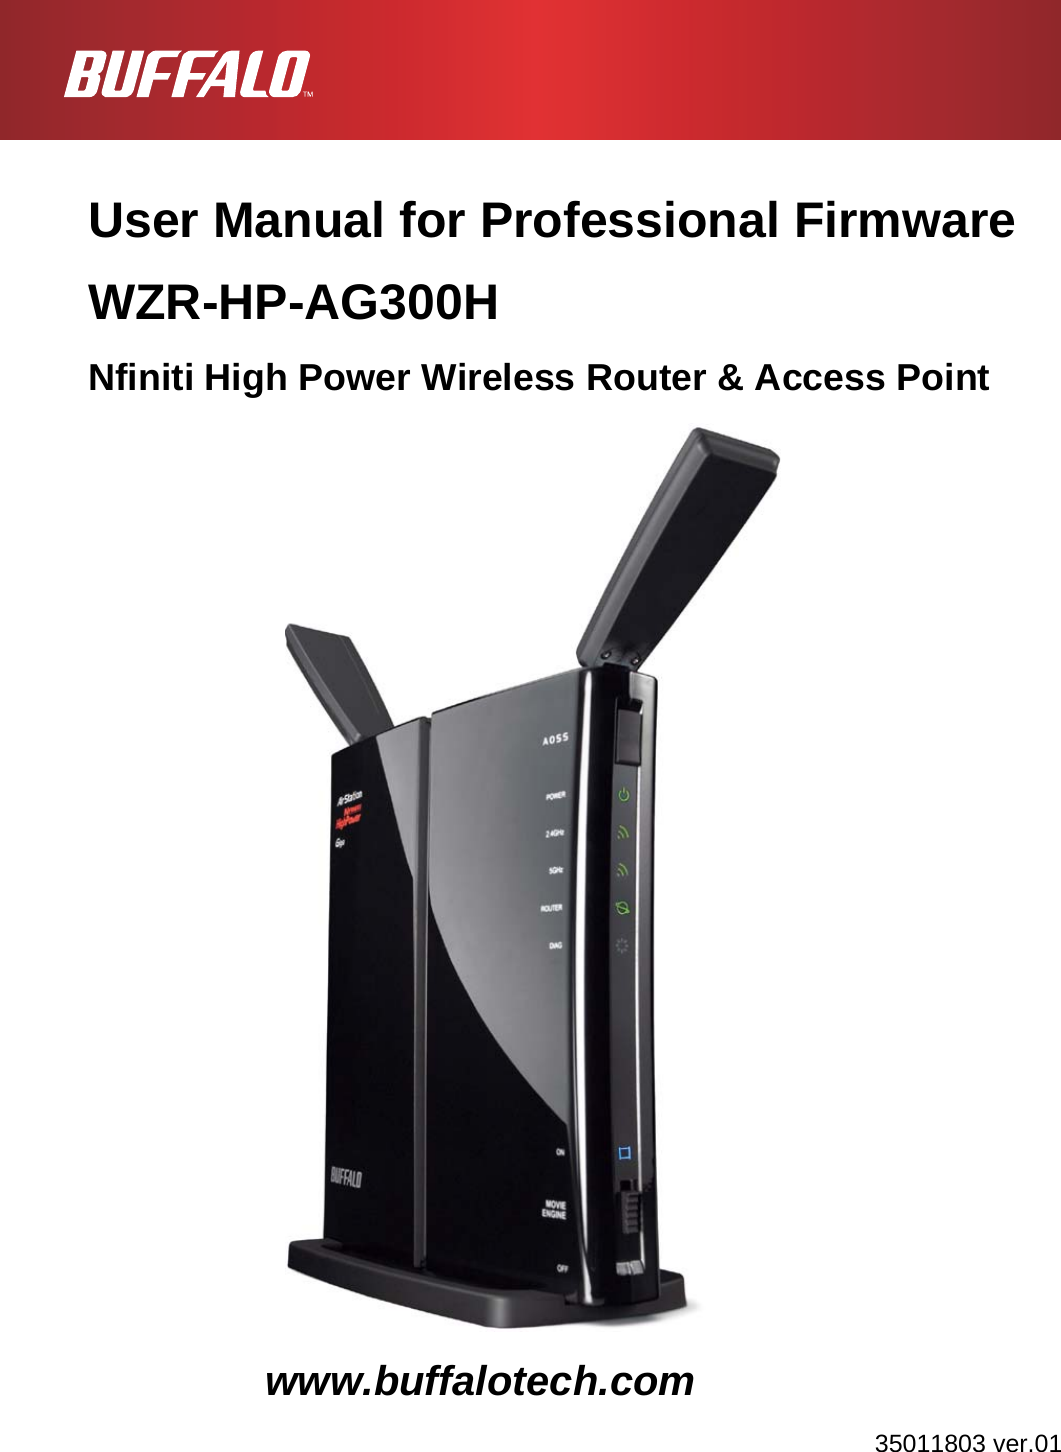   User Manual for Professional Firmware WZR-HP-AG300H Nfiniti High Power Wireless Router &amp; Access Point         www.buffalotech.com 35011803 ver.01